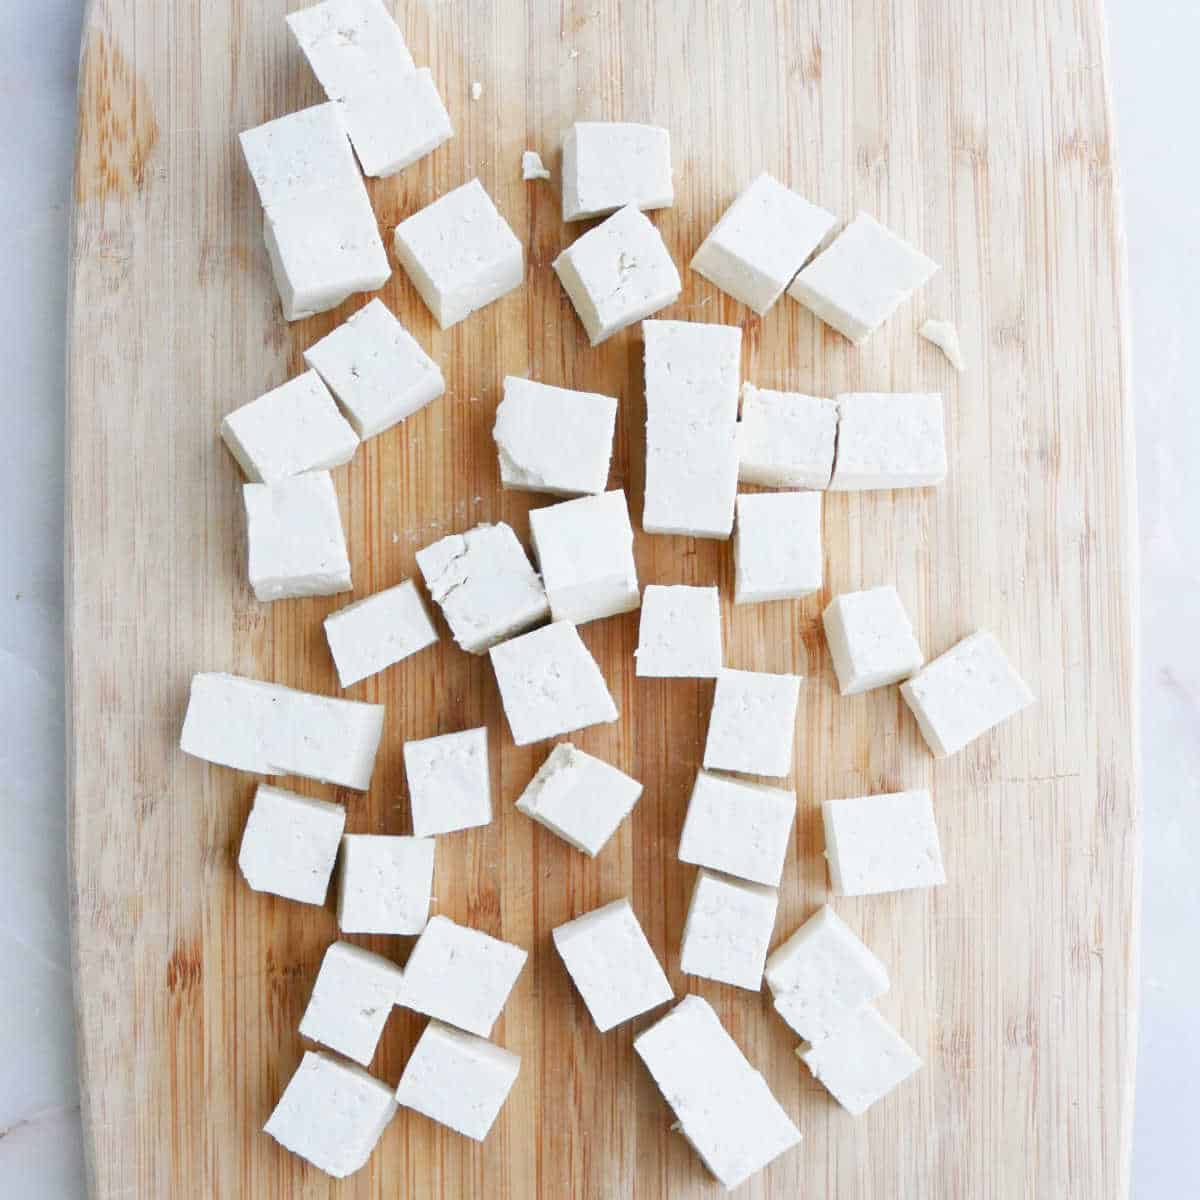 tofu cut into cubes on a cutting board